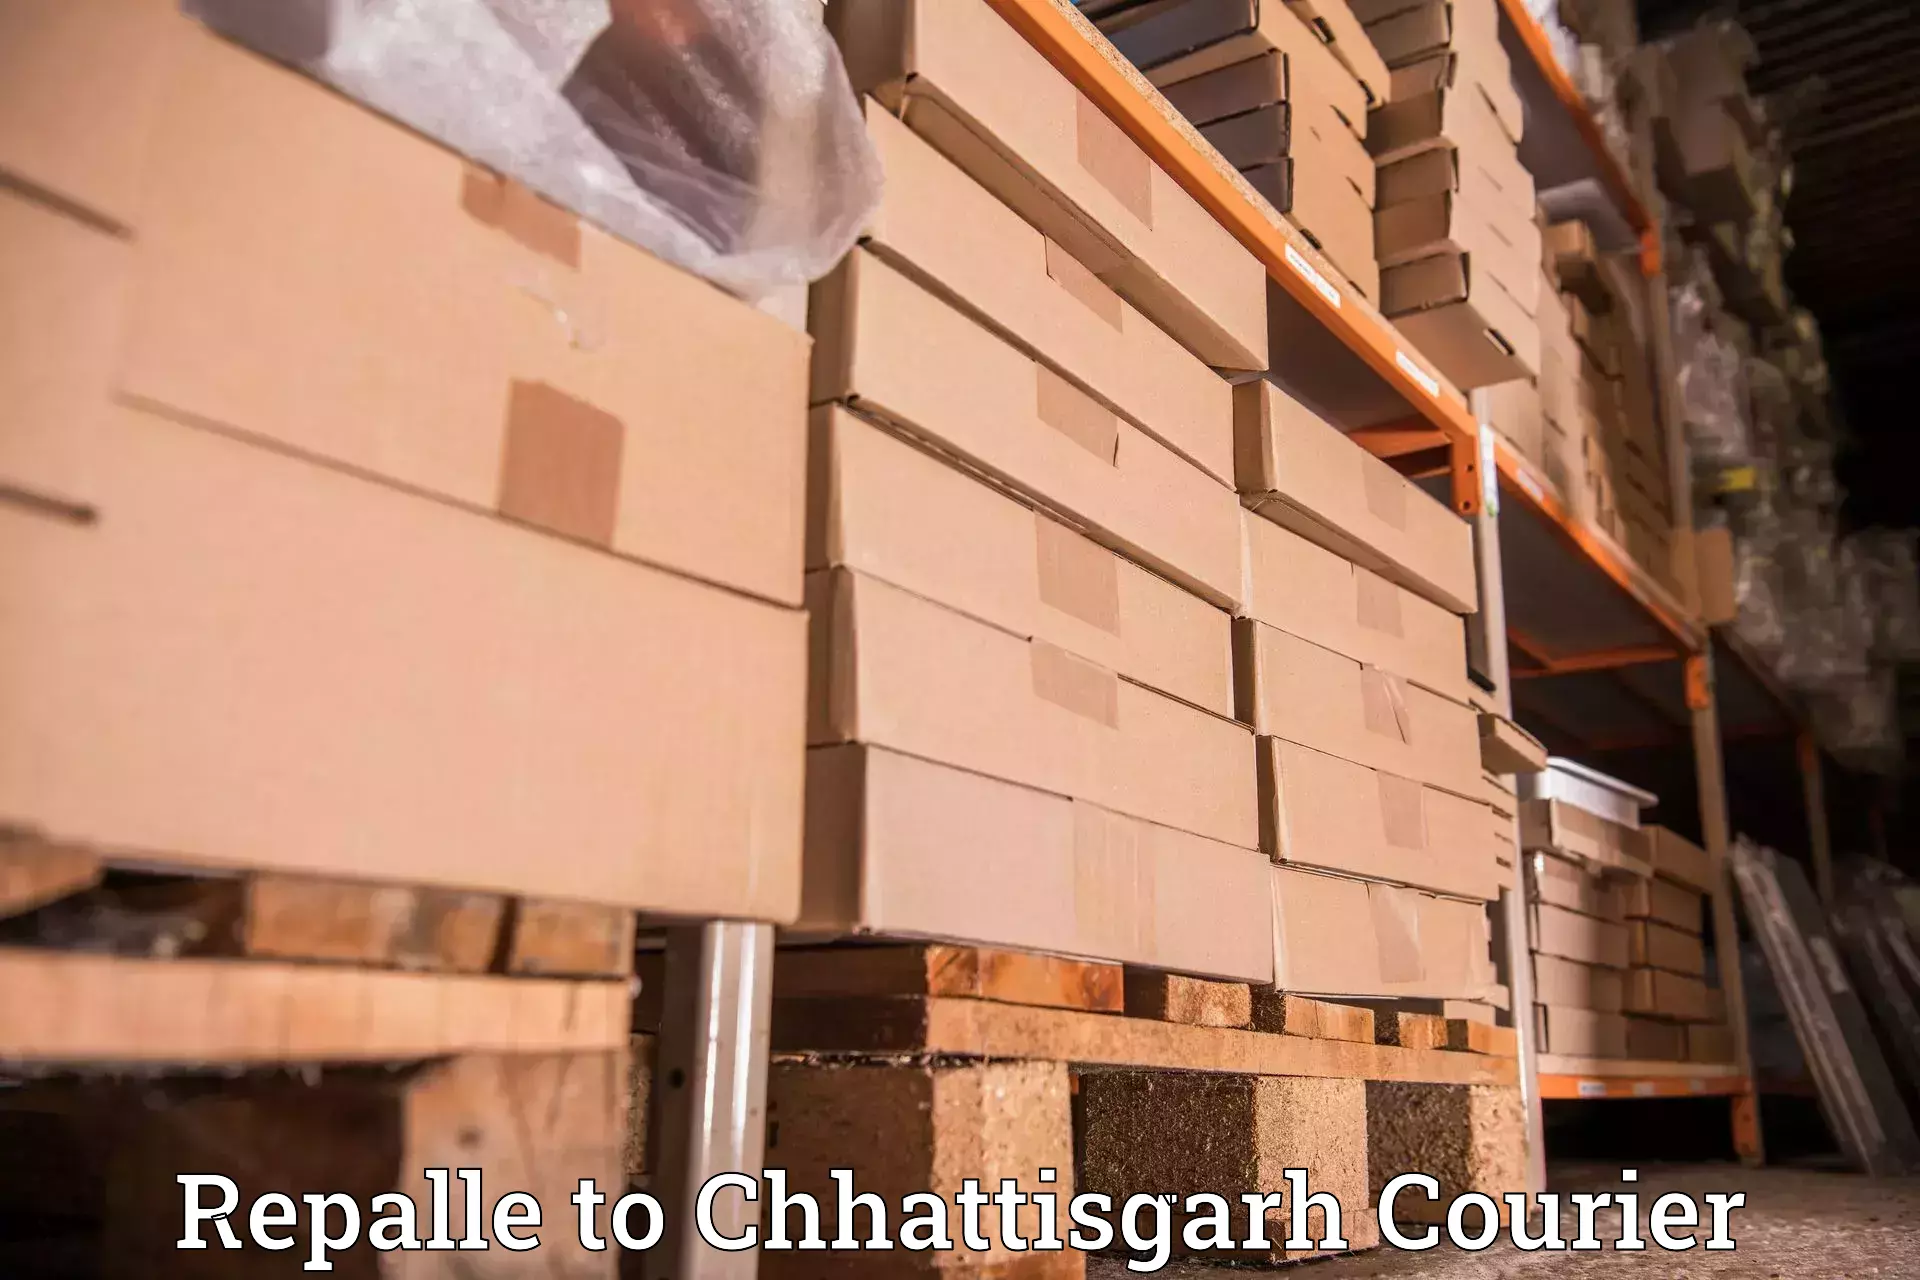 Express logistics service Repalle to Patna Chhattisgarh